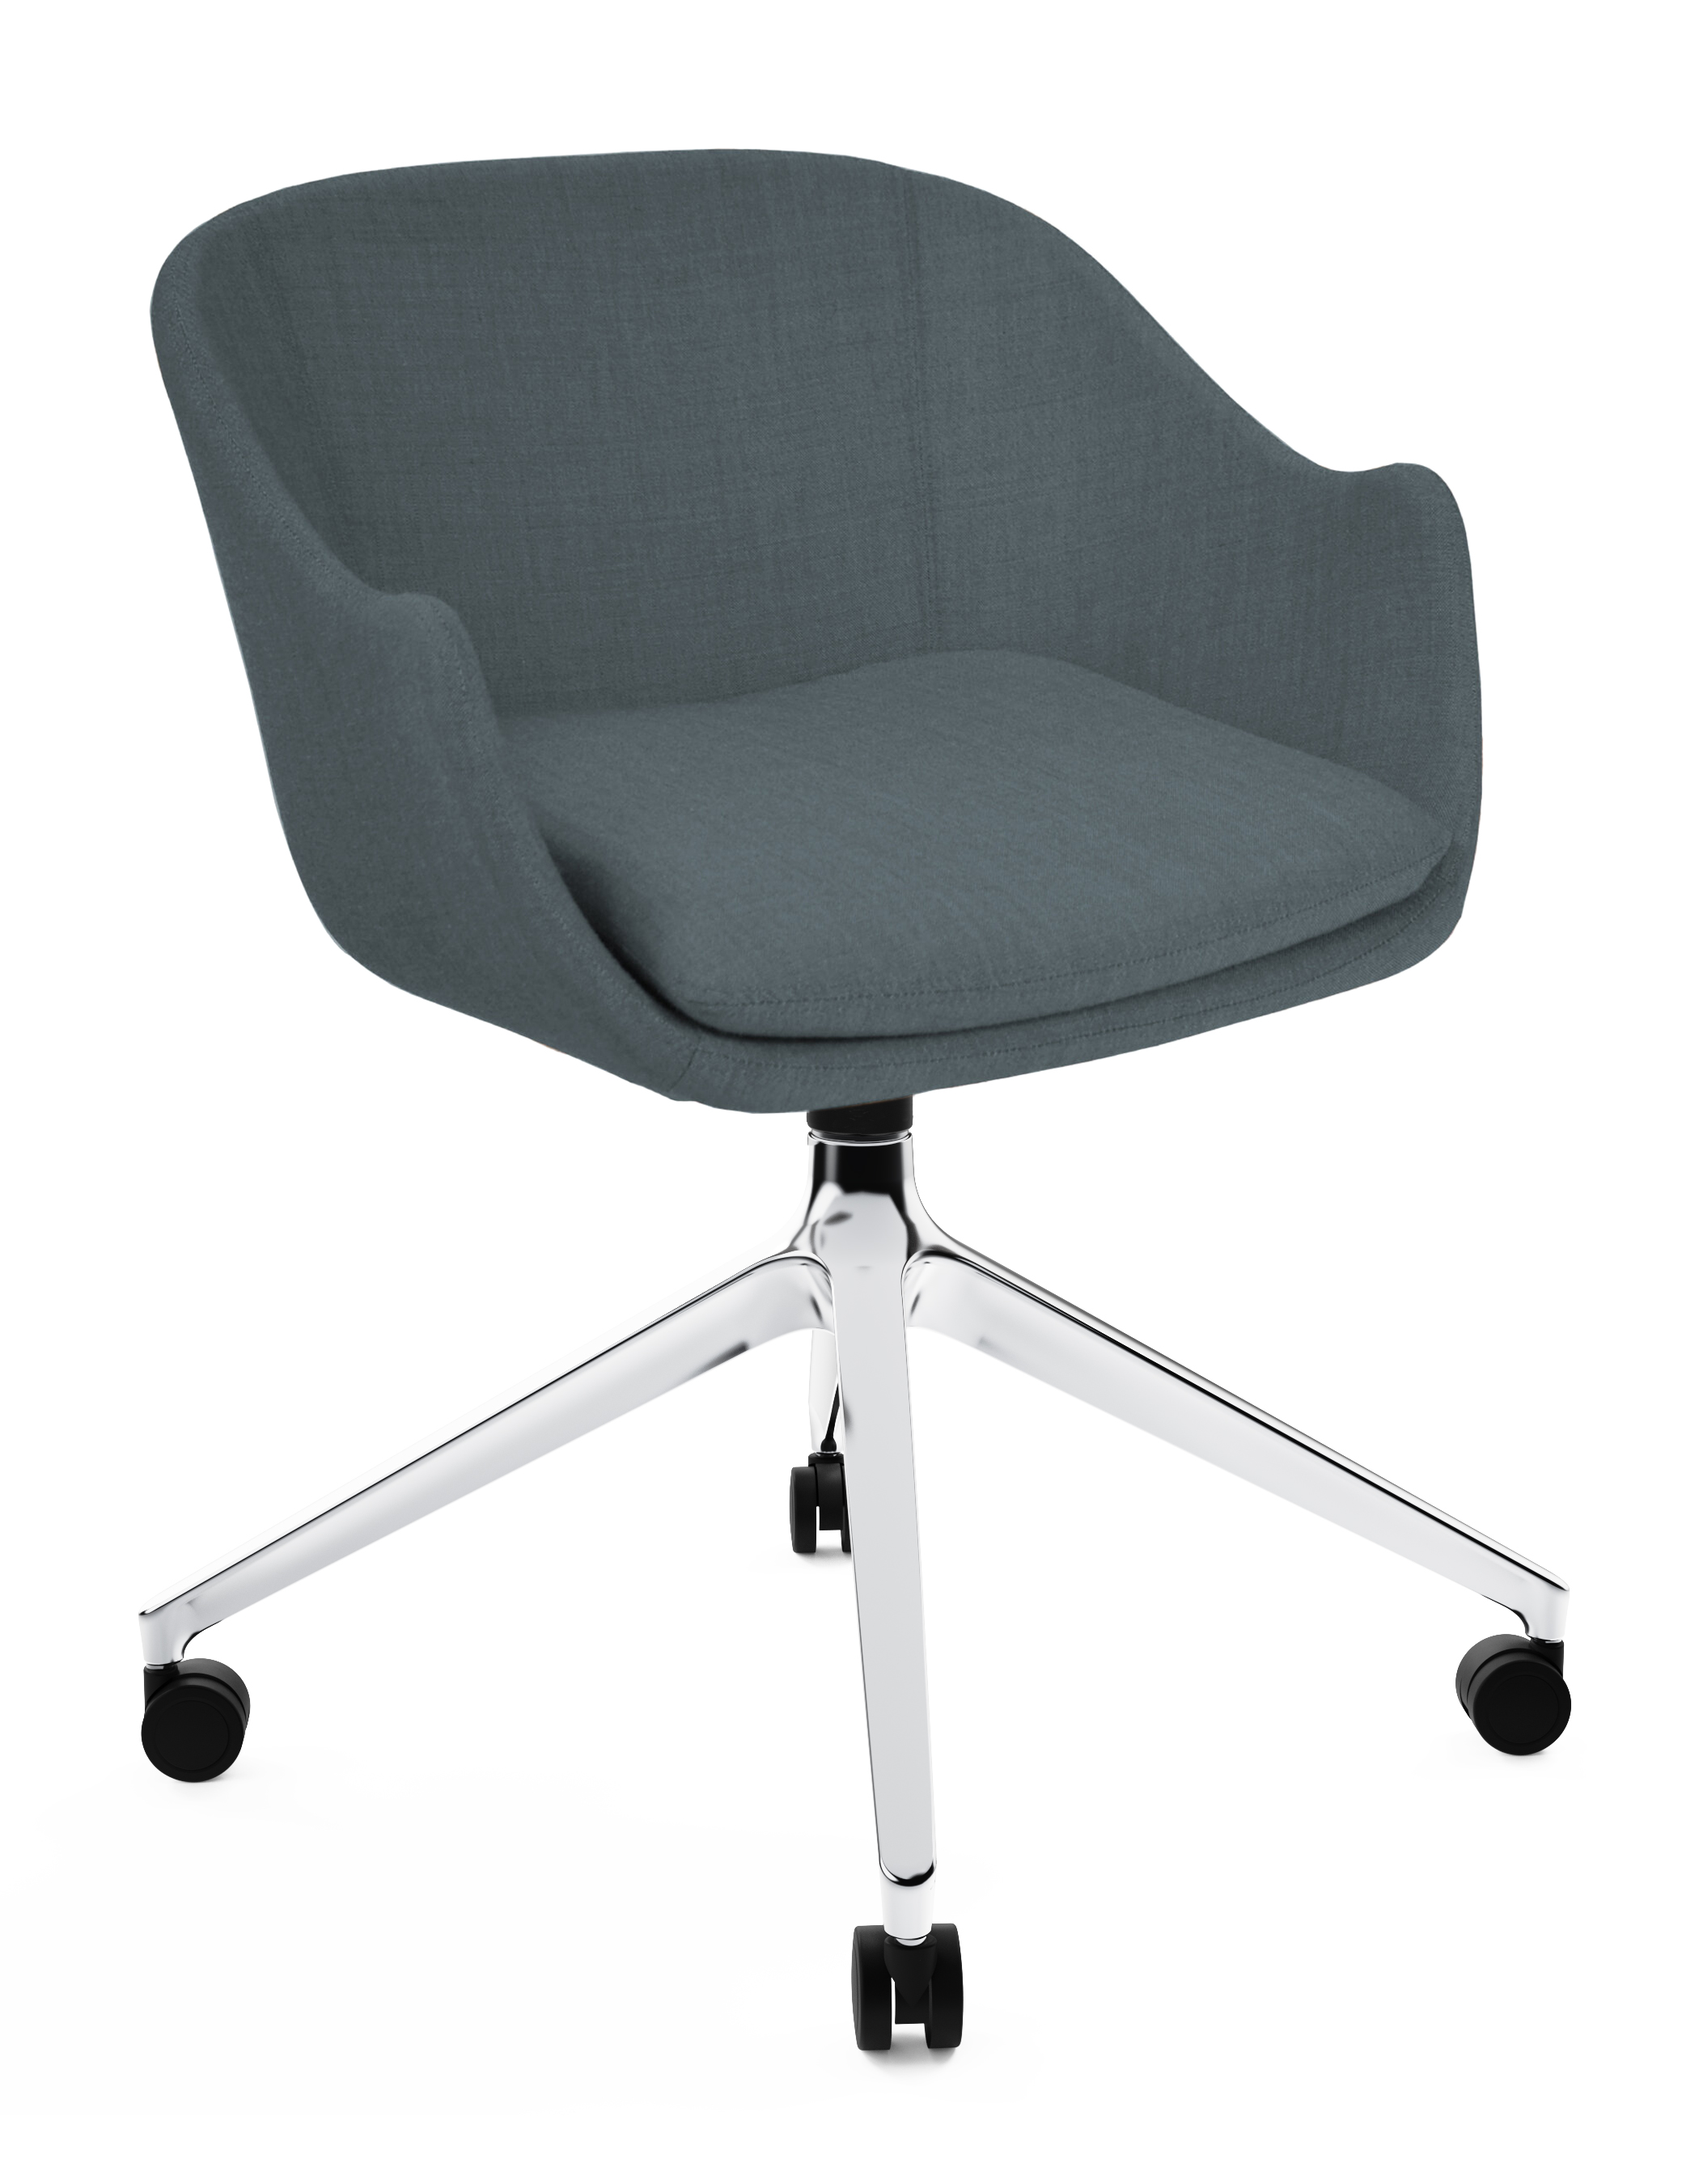 WS - Noir chair - 4 star pyramidal castor polished base (Front angle)